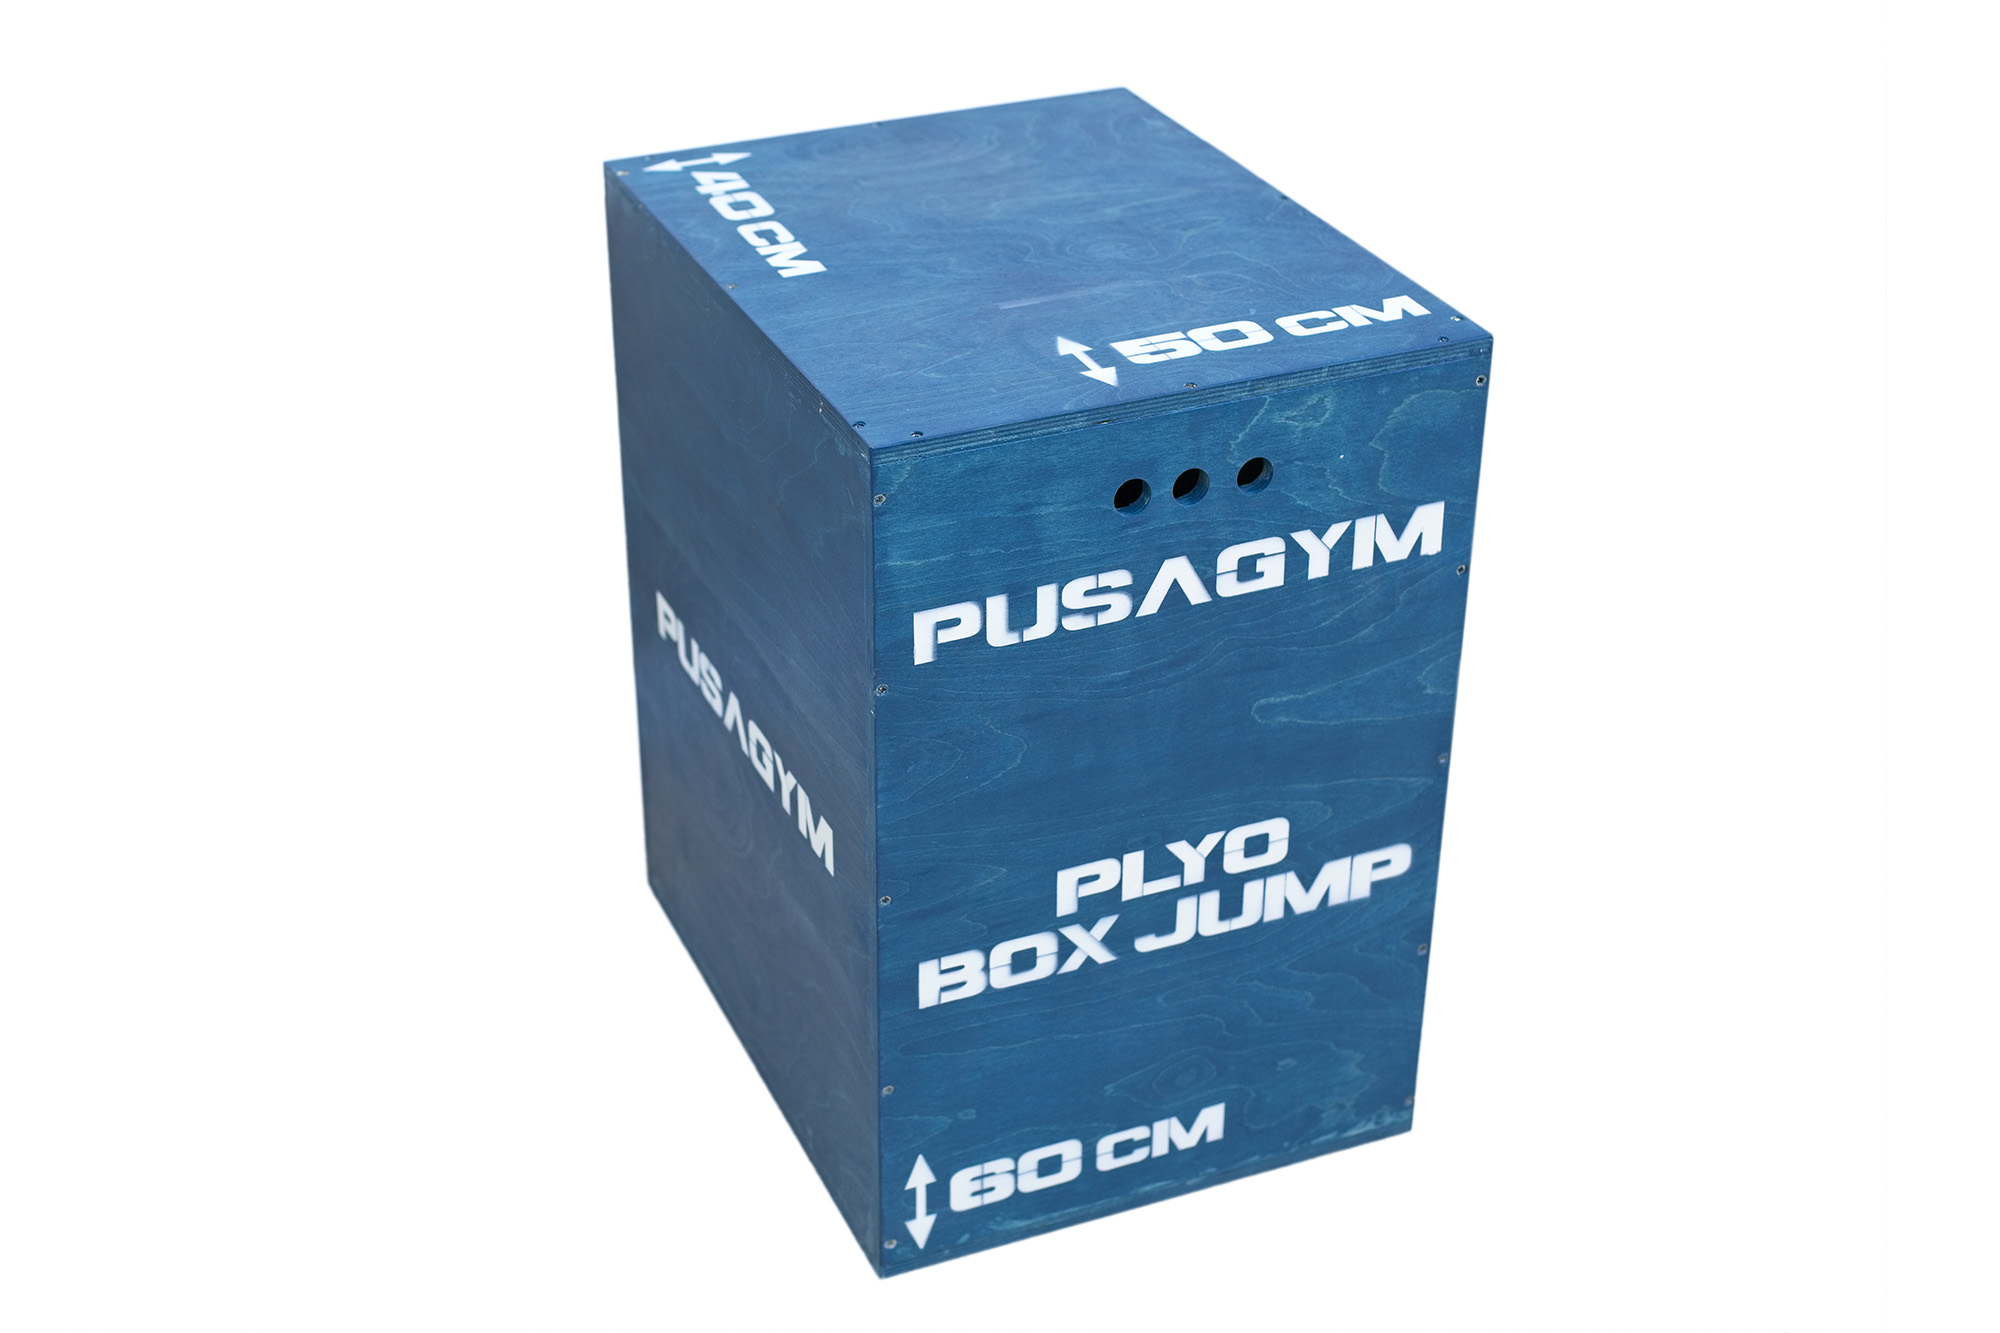 PusaGym Ply -Box Jump